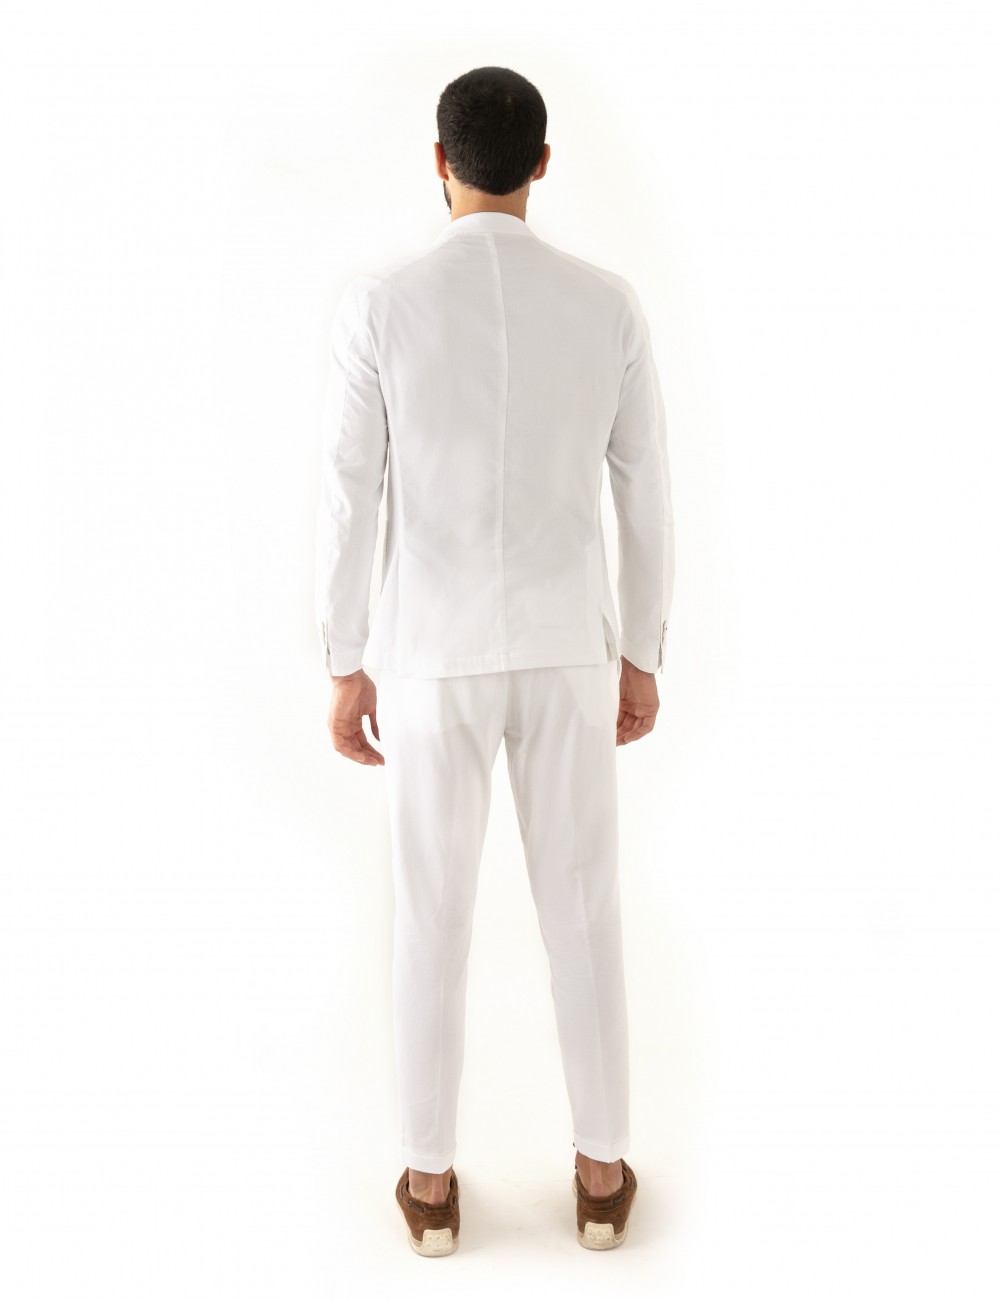 Giacca monopetto bianca VAB mod. "Nisida" in cotone ultra-light indossata retro